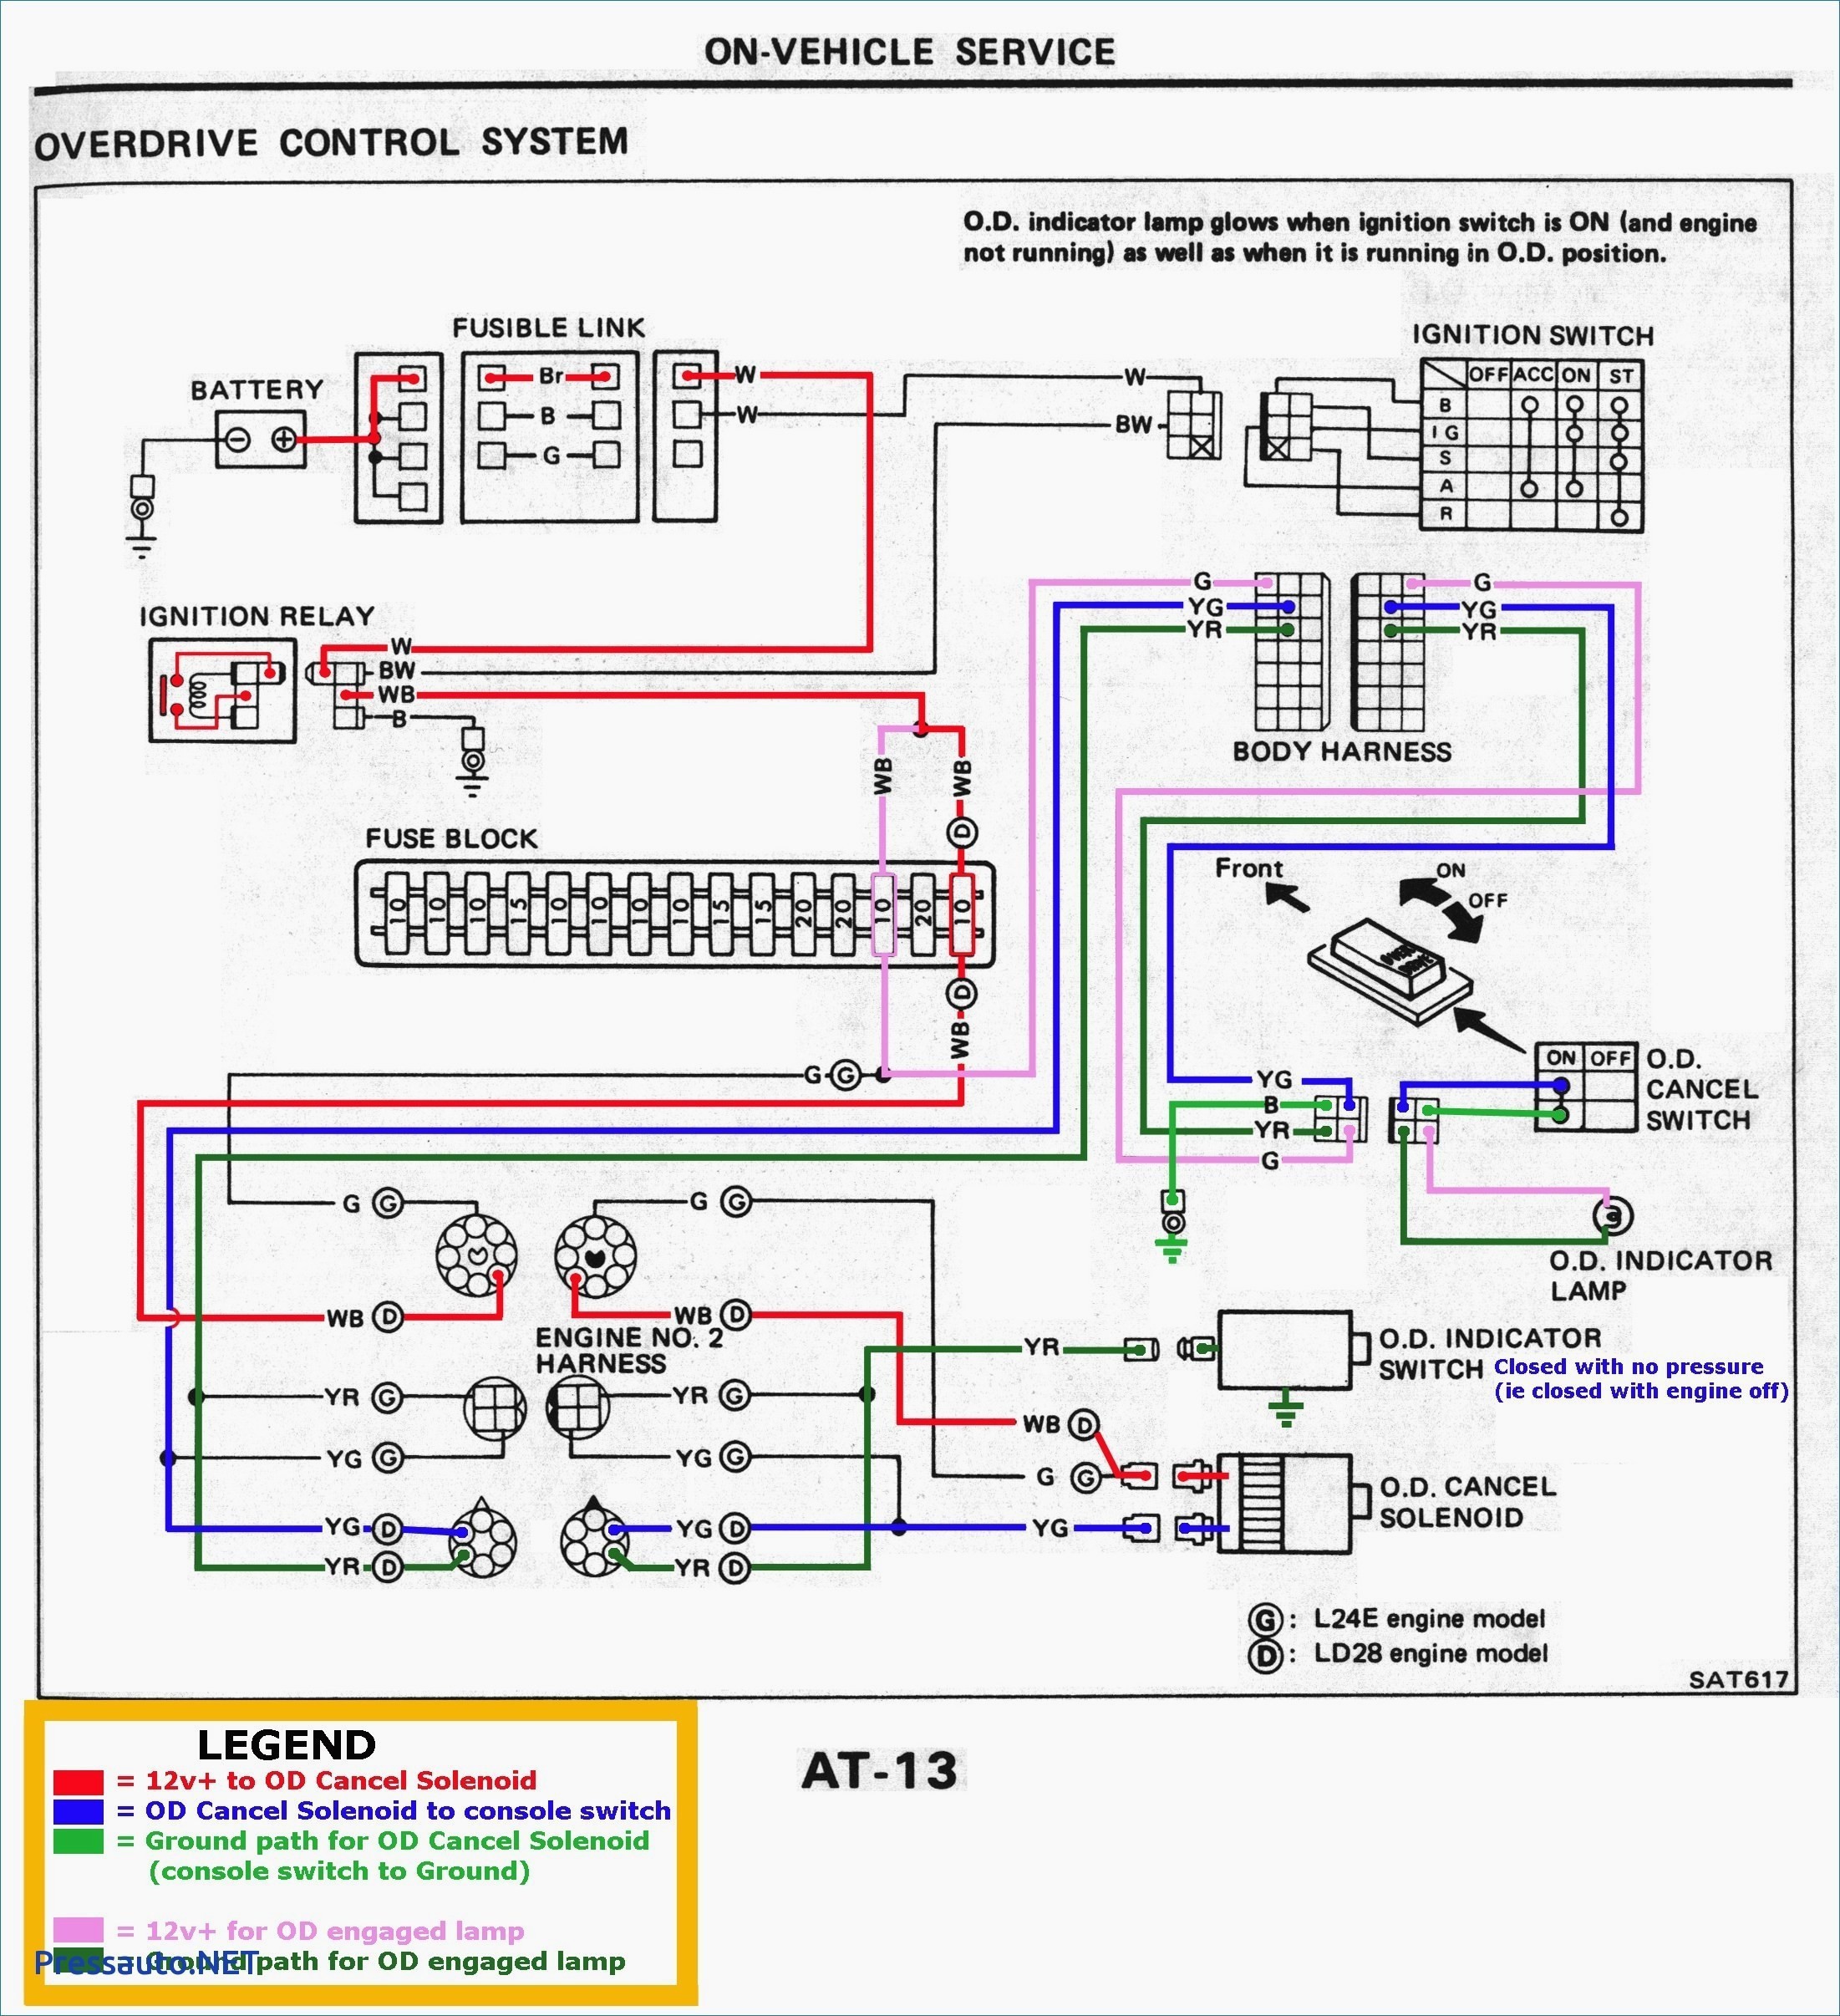 Vision Car Alarm Wiring Diagram Flood Light Wiring Diagram Wiring Diagram Of Vision Car Alarm Wiring Diagram